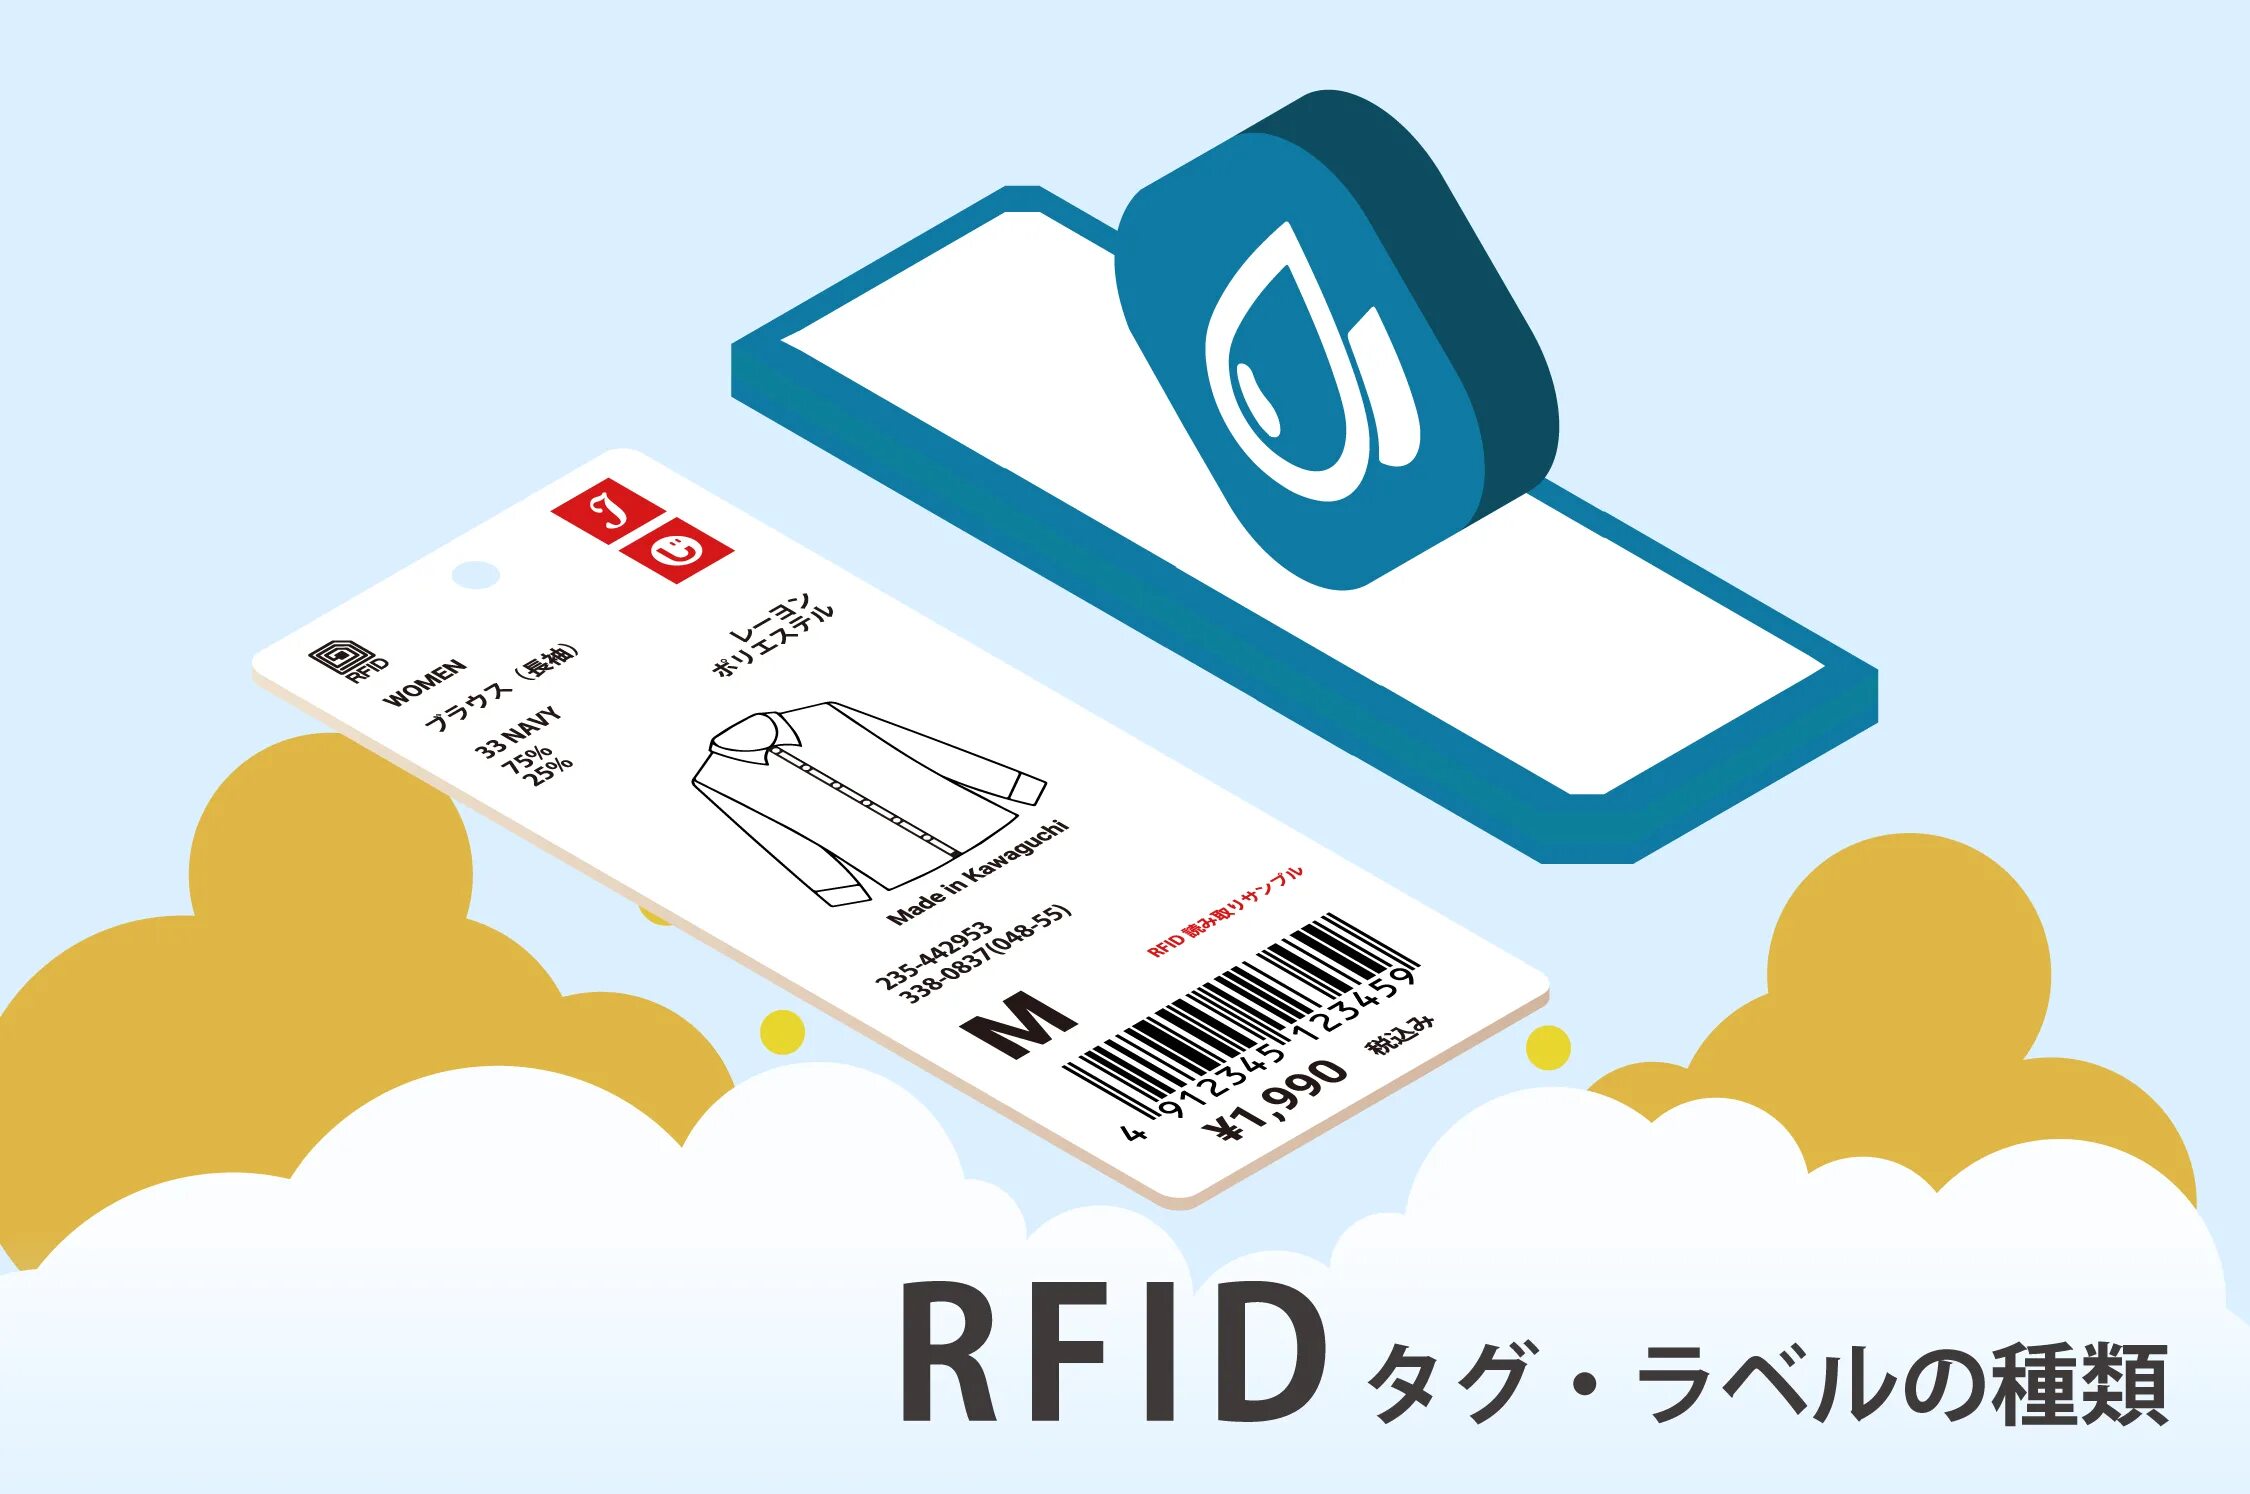 RFID идентификатор. RFID-карта. Банковская карта RFID метка. RFID карта tid. Метка для отслеживания